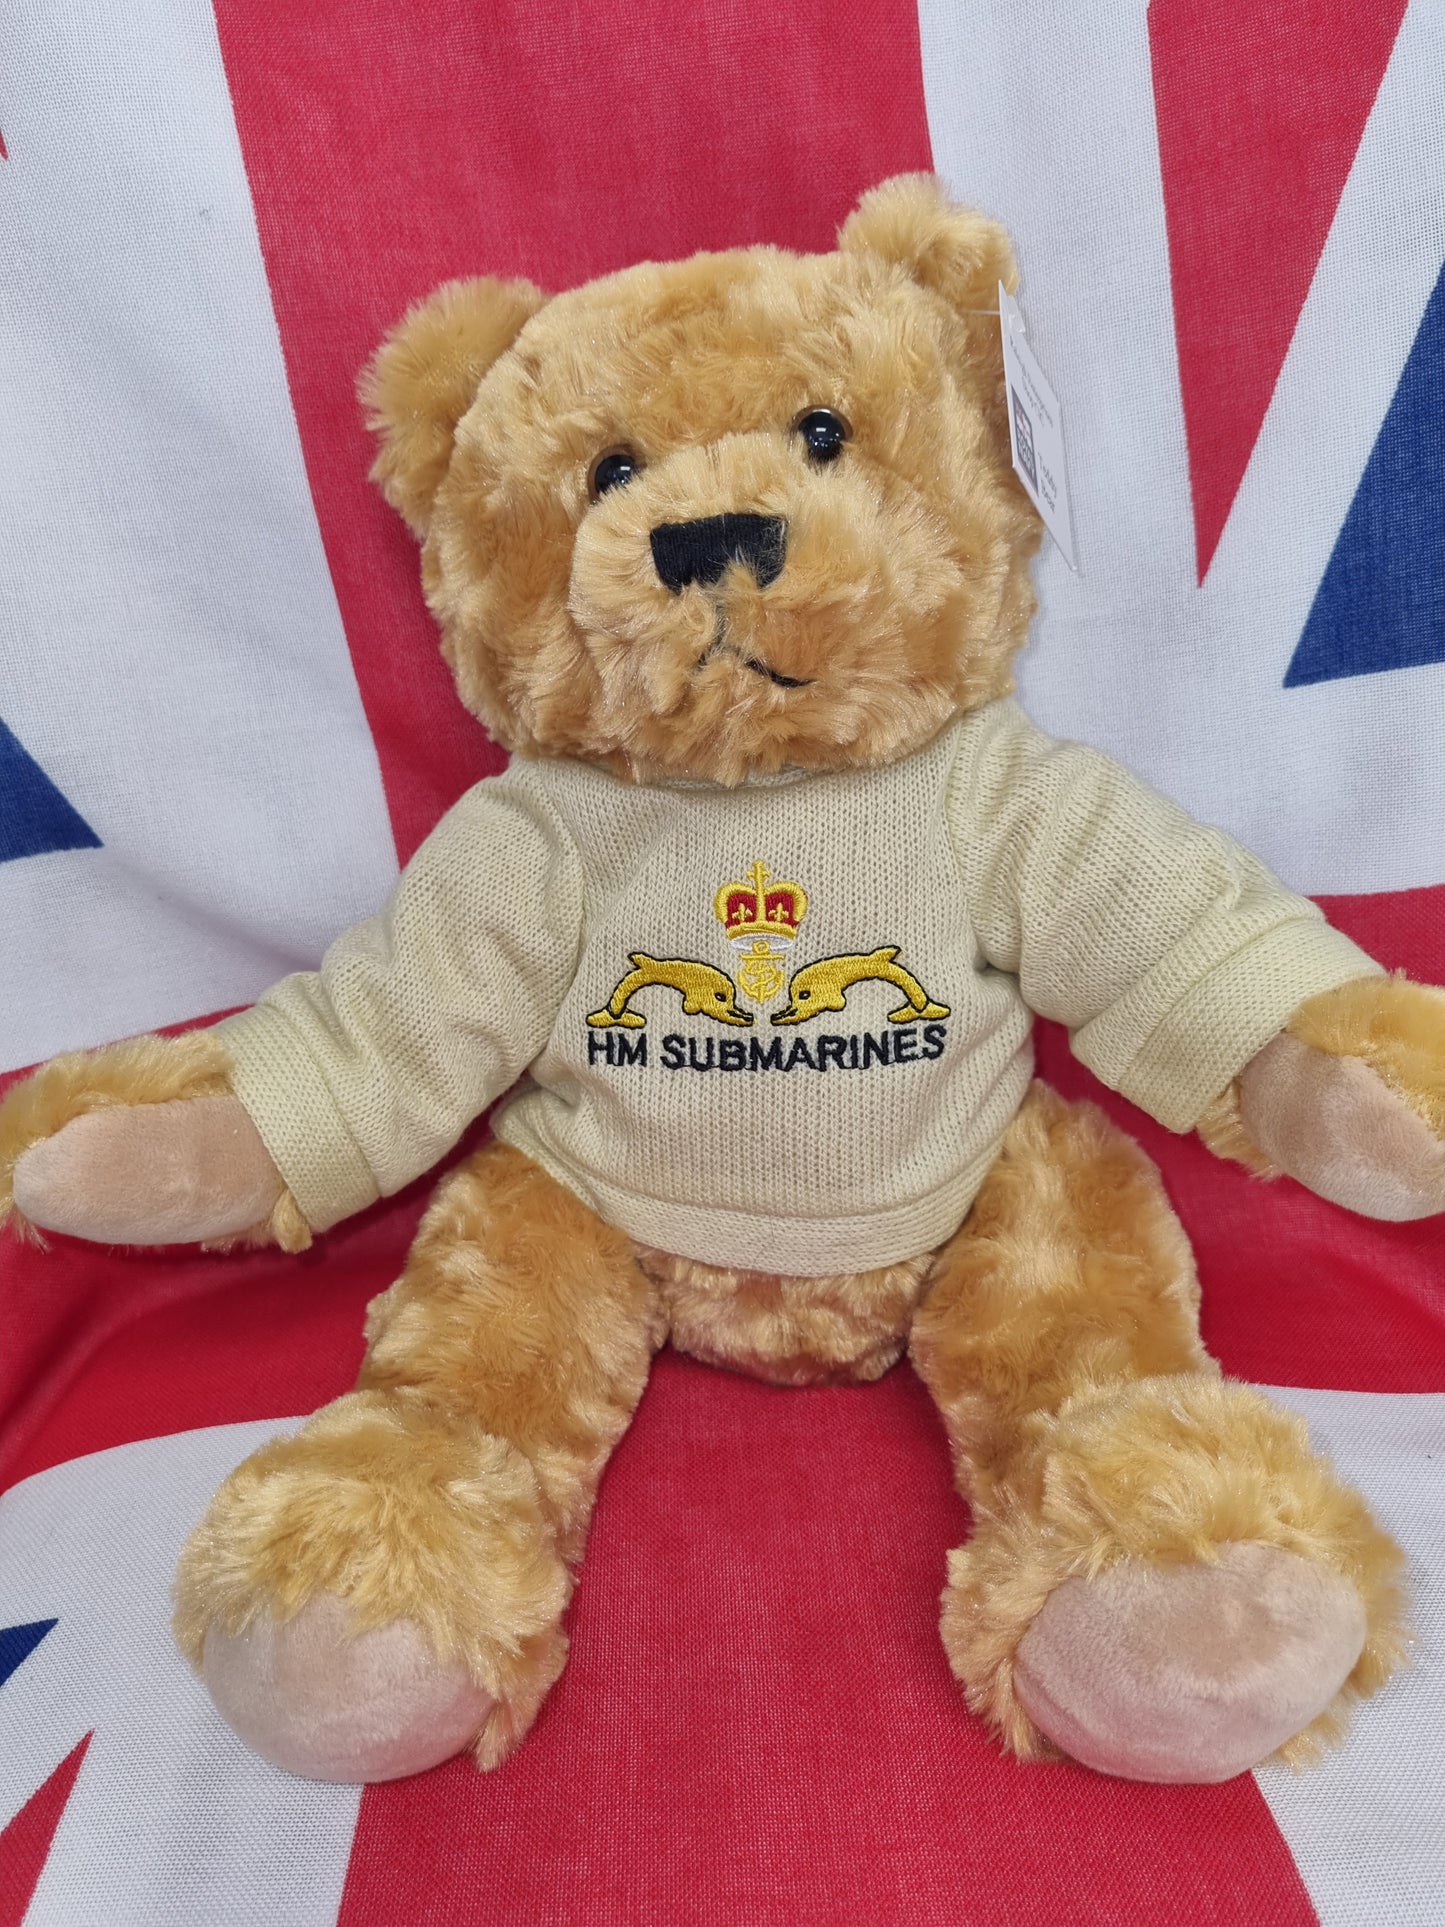 Royal Navy & Submariner teddy bear